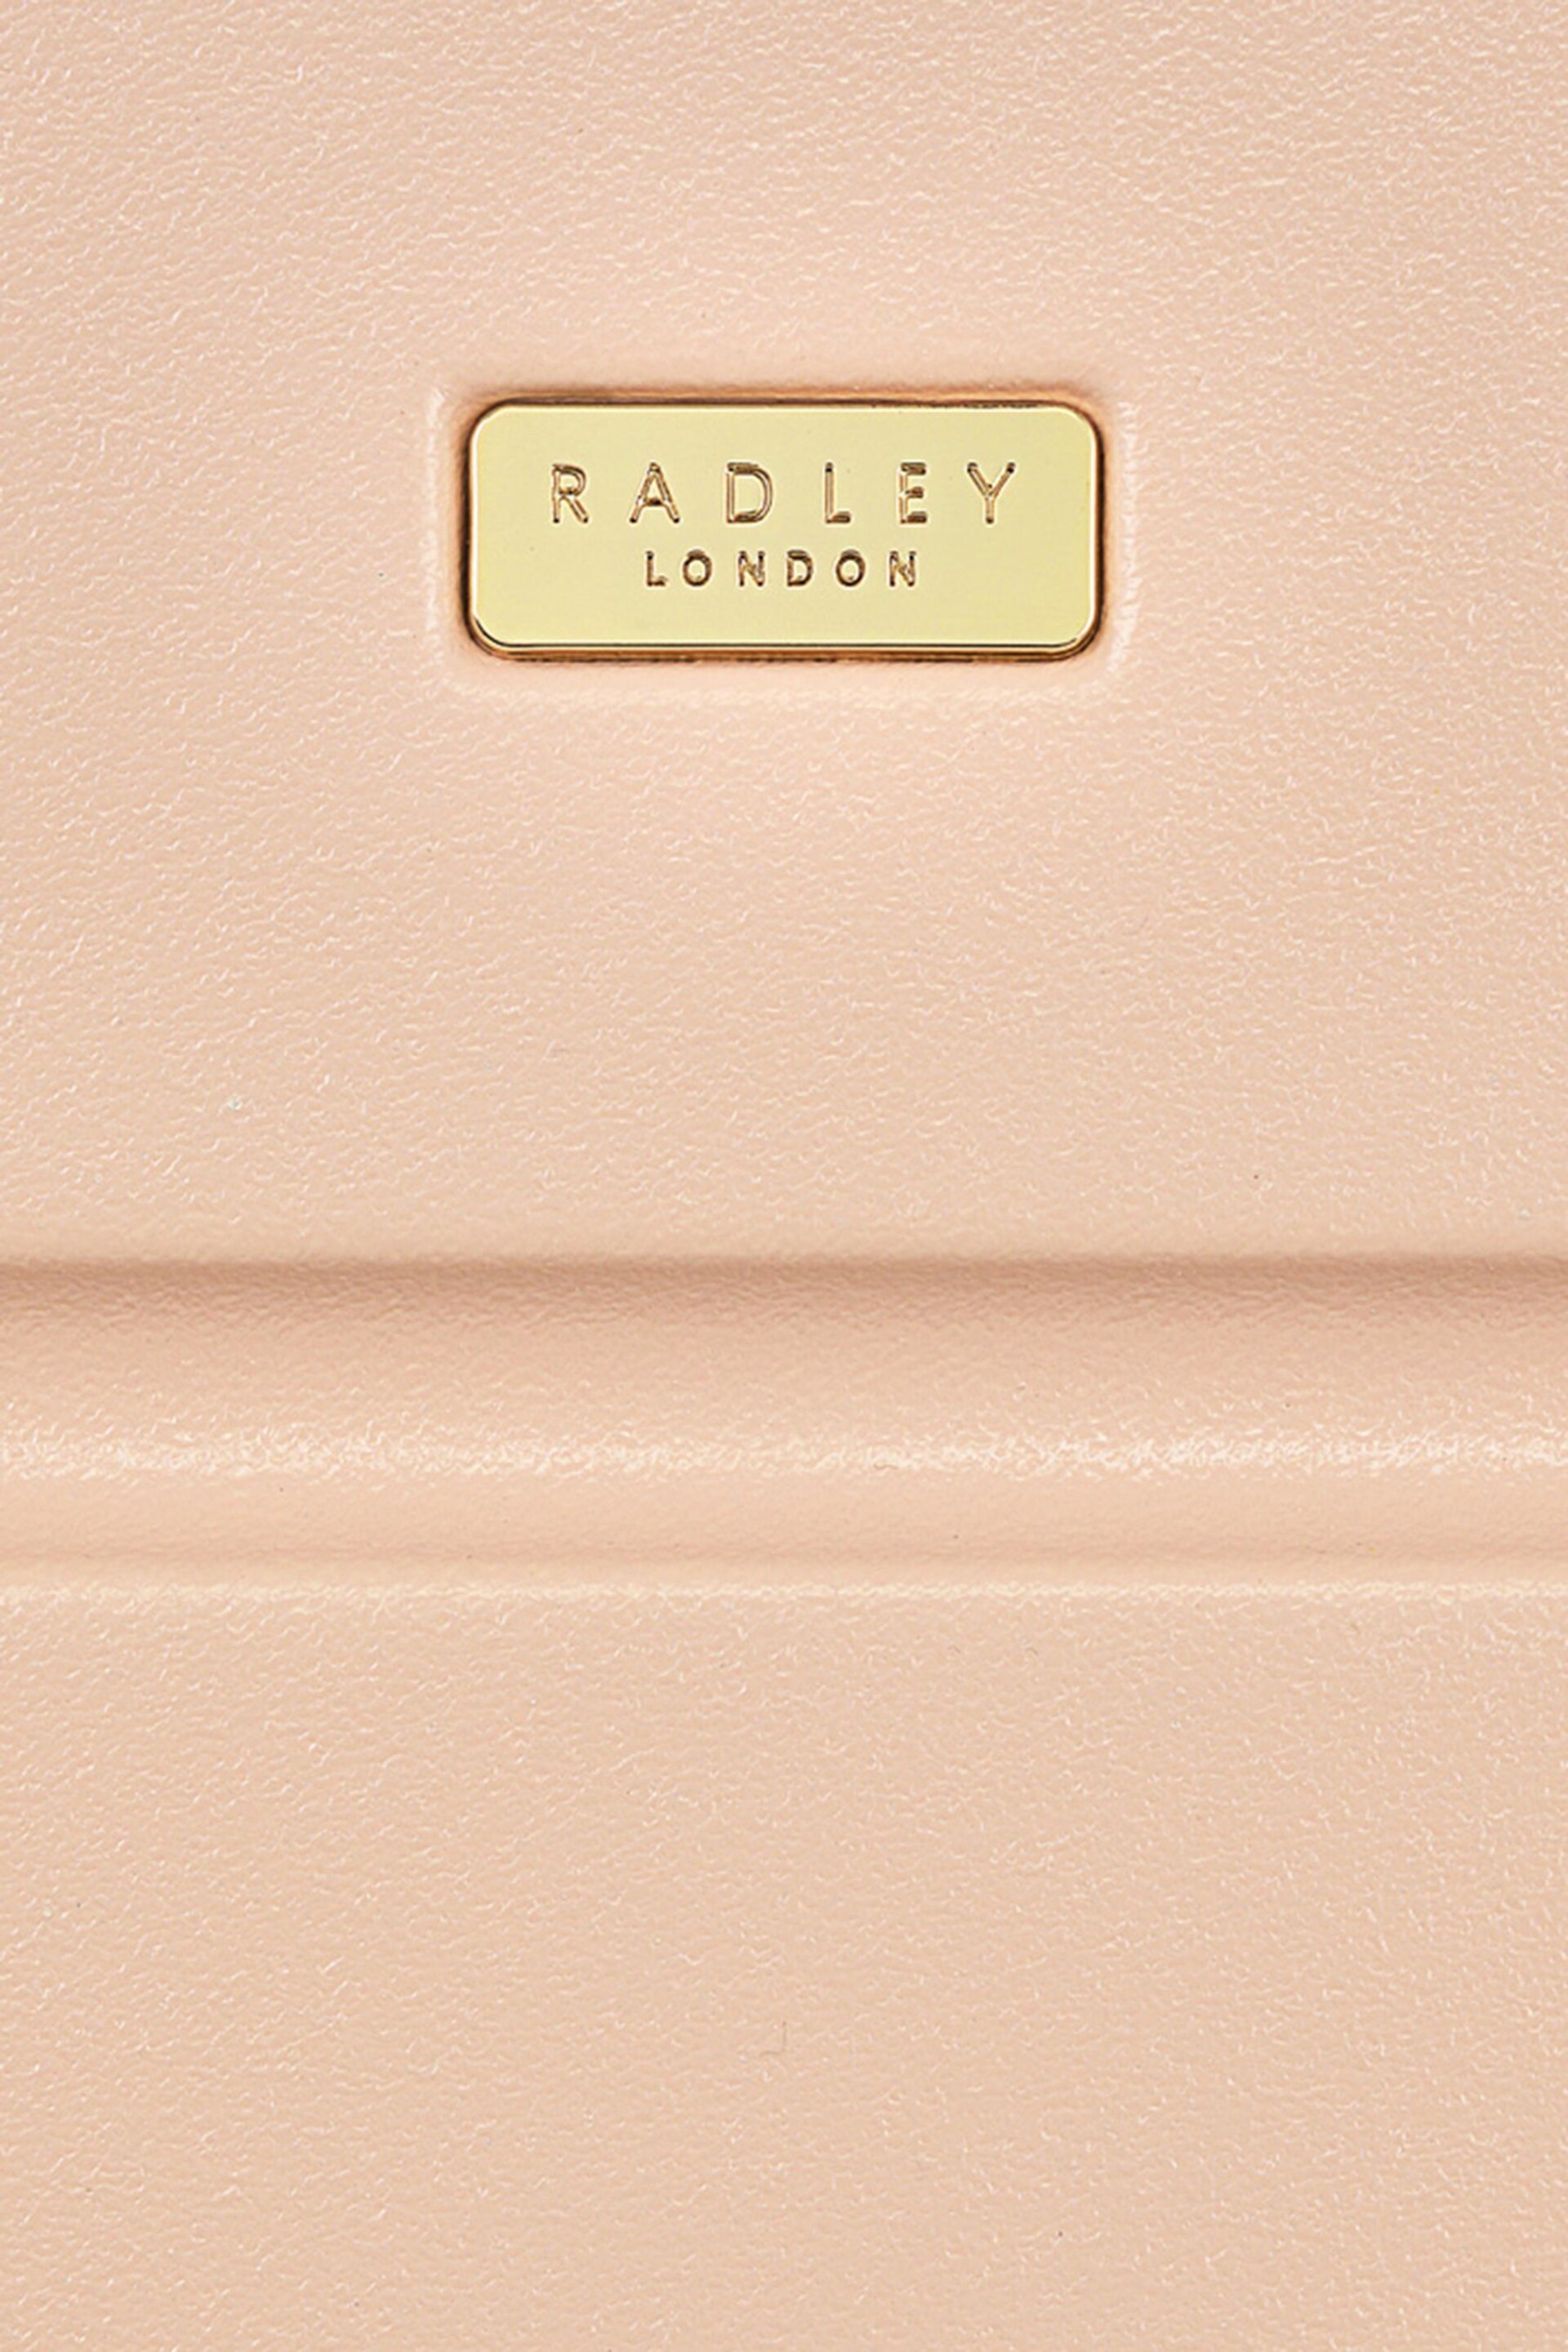 Radley London Medium Lexington 4 Wheel Suitcase - Image 5 of 5